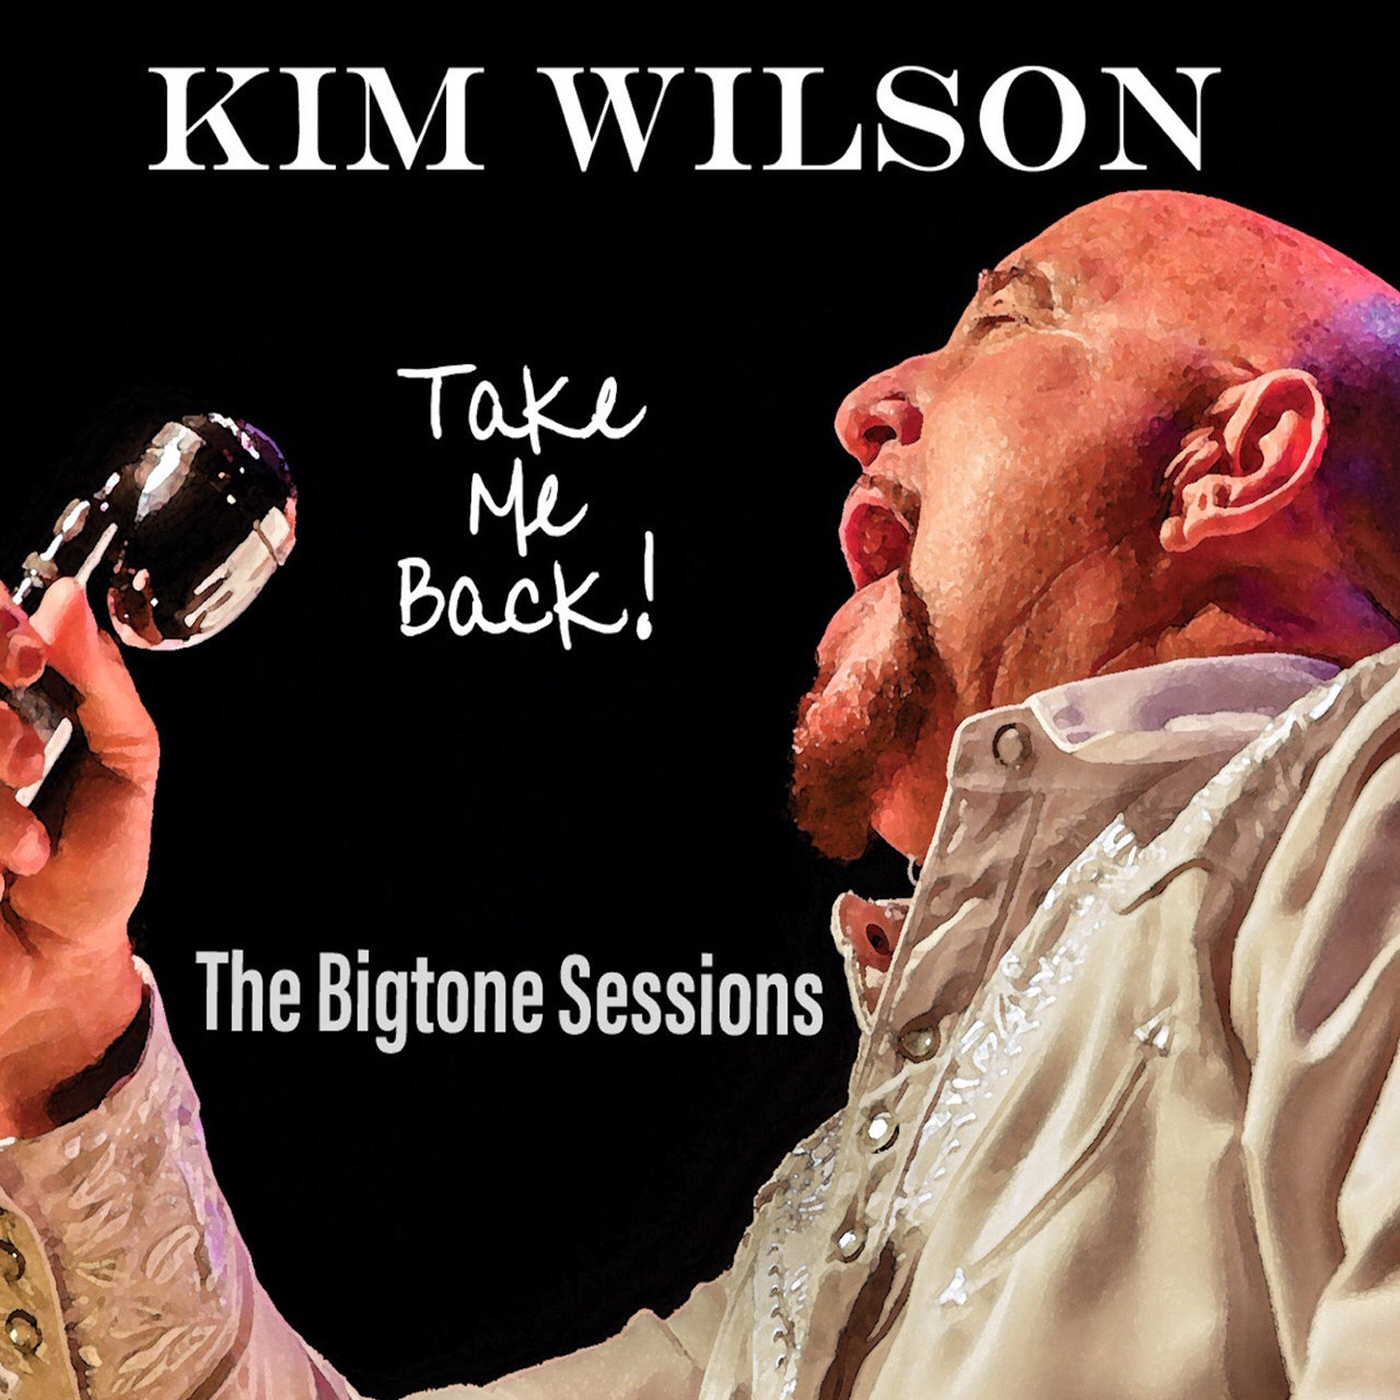 REPOST - Kim Wilson - 2020 - Take Me Back!...The Bigtone Sessions (Blues) (flac)